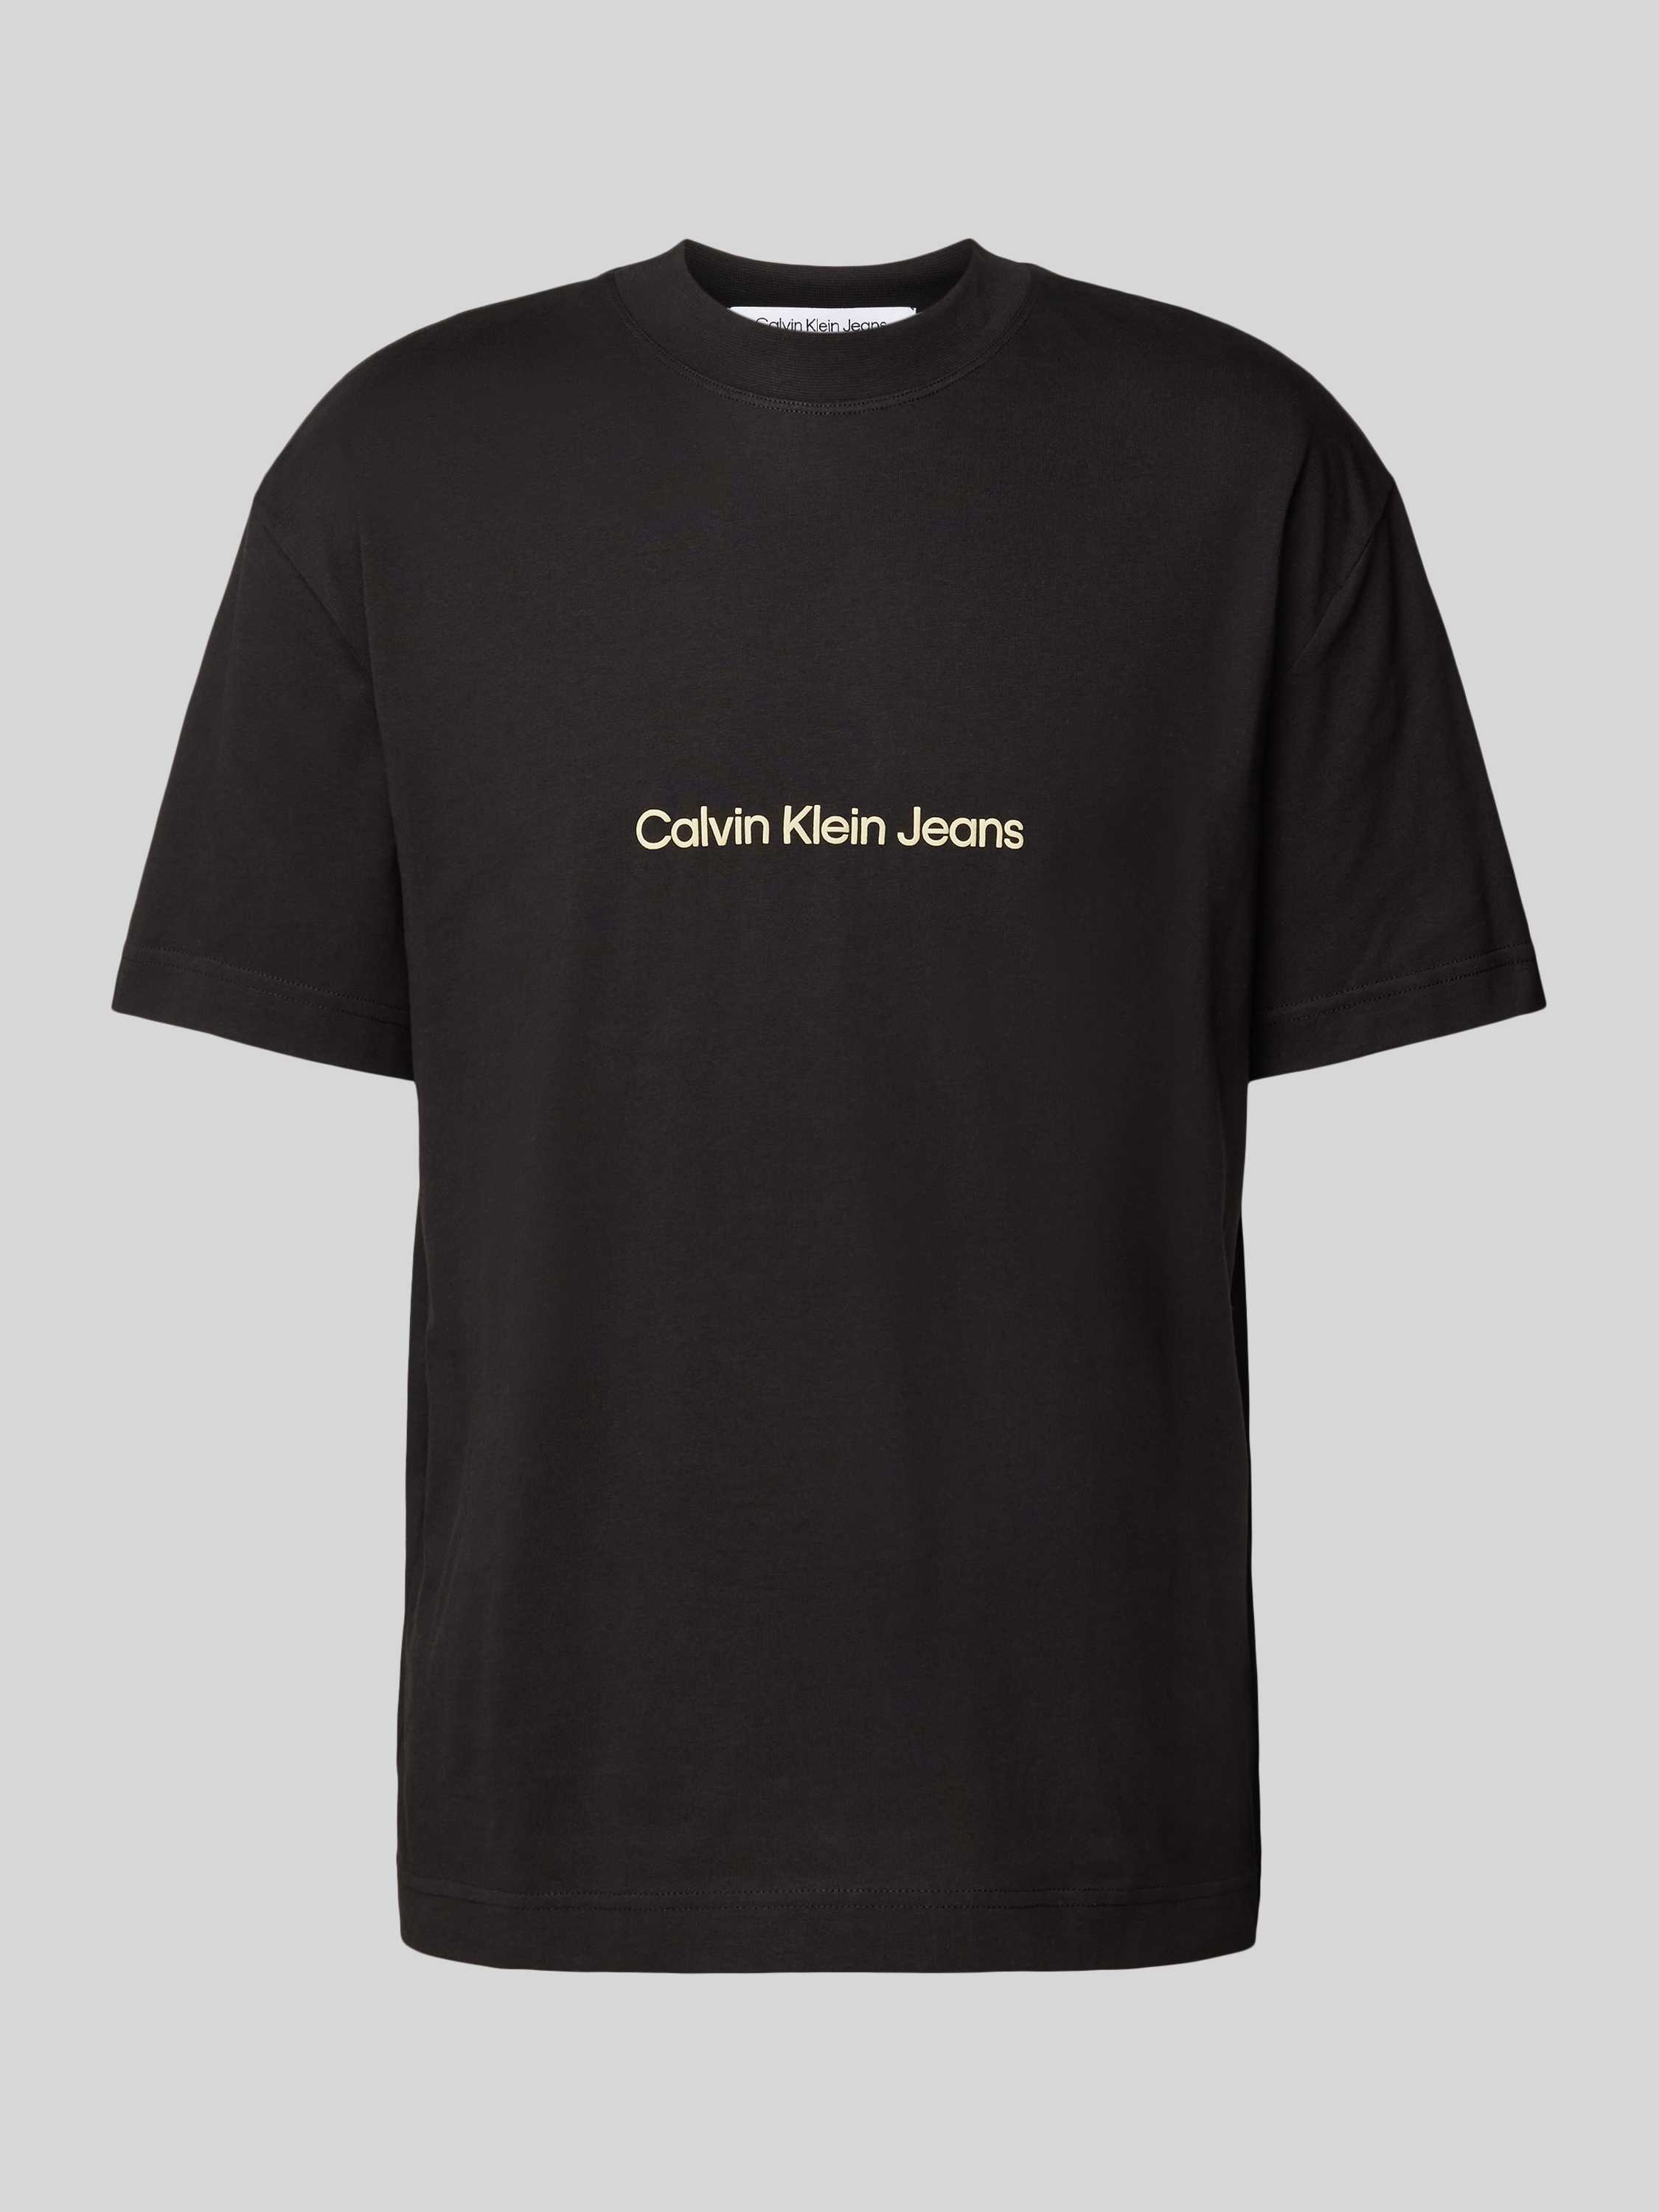 Calvin Klein Jeans Zwart Logo T-shirt Heren Lente Collectie Black Heren